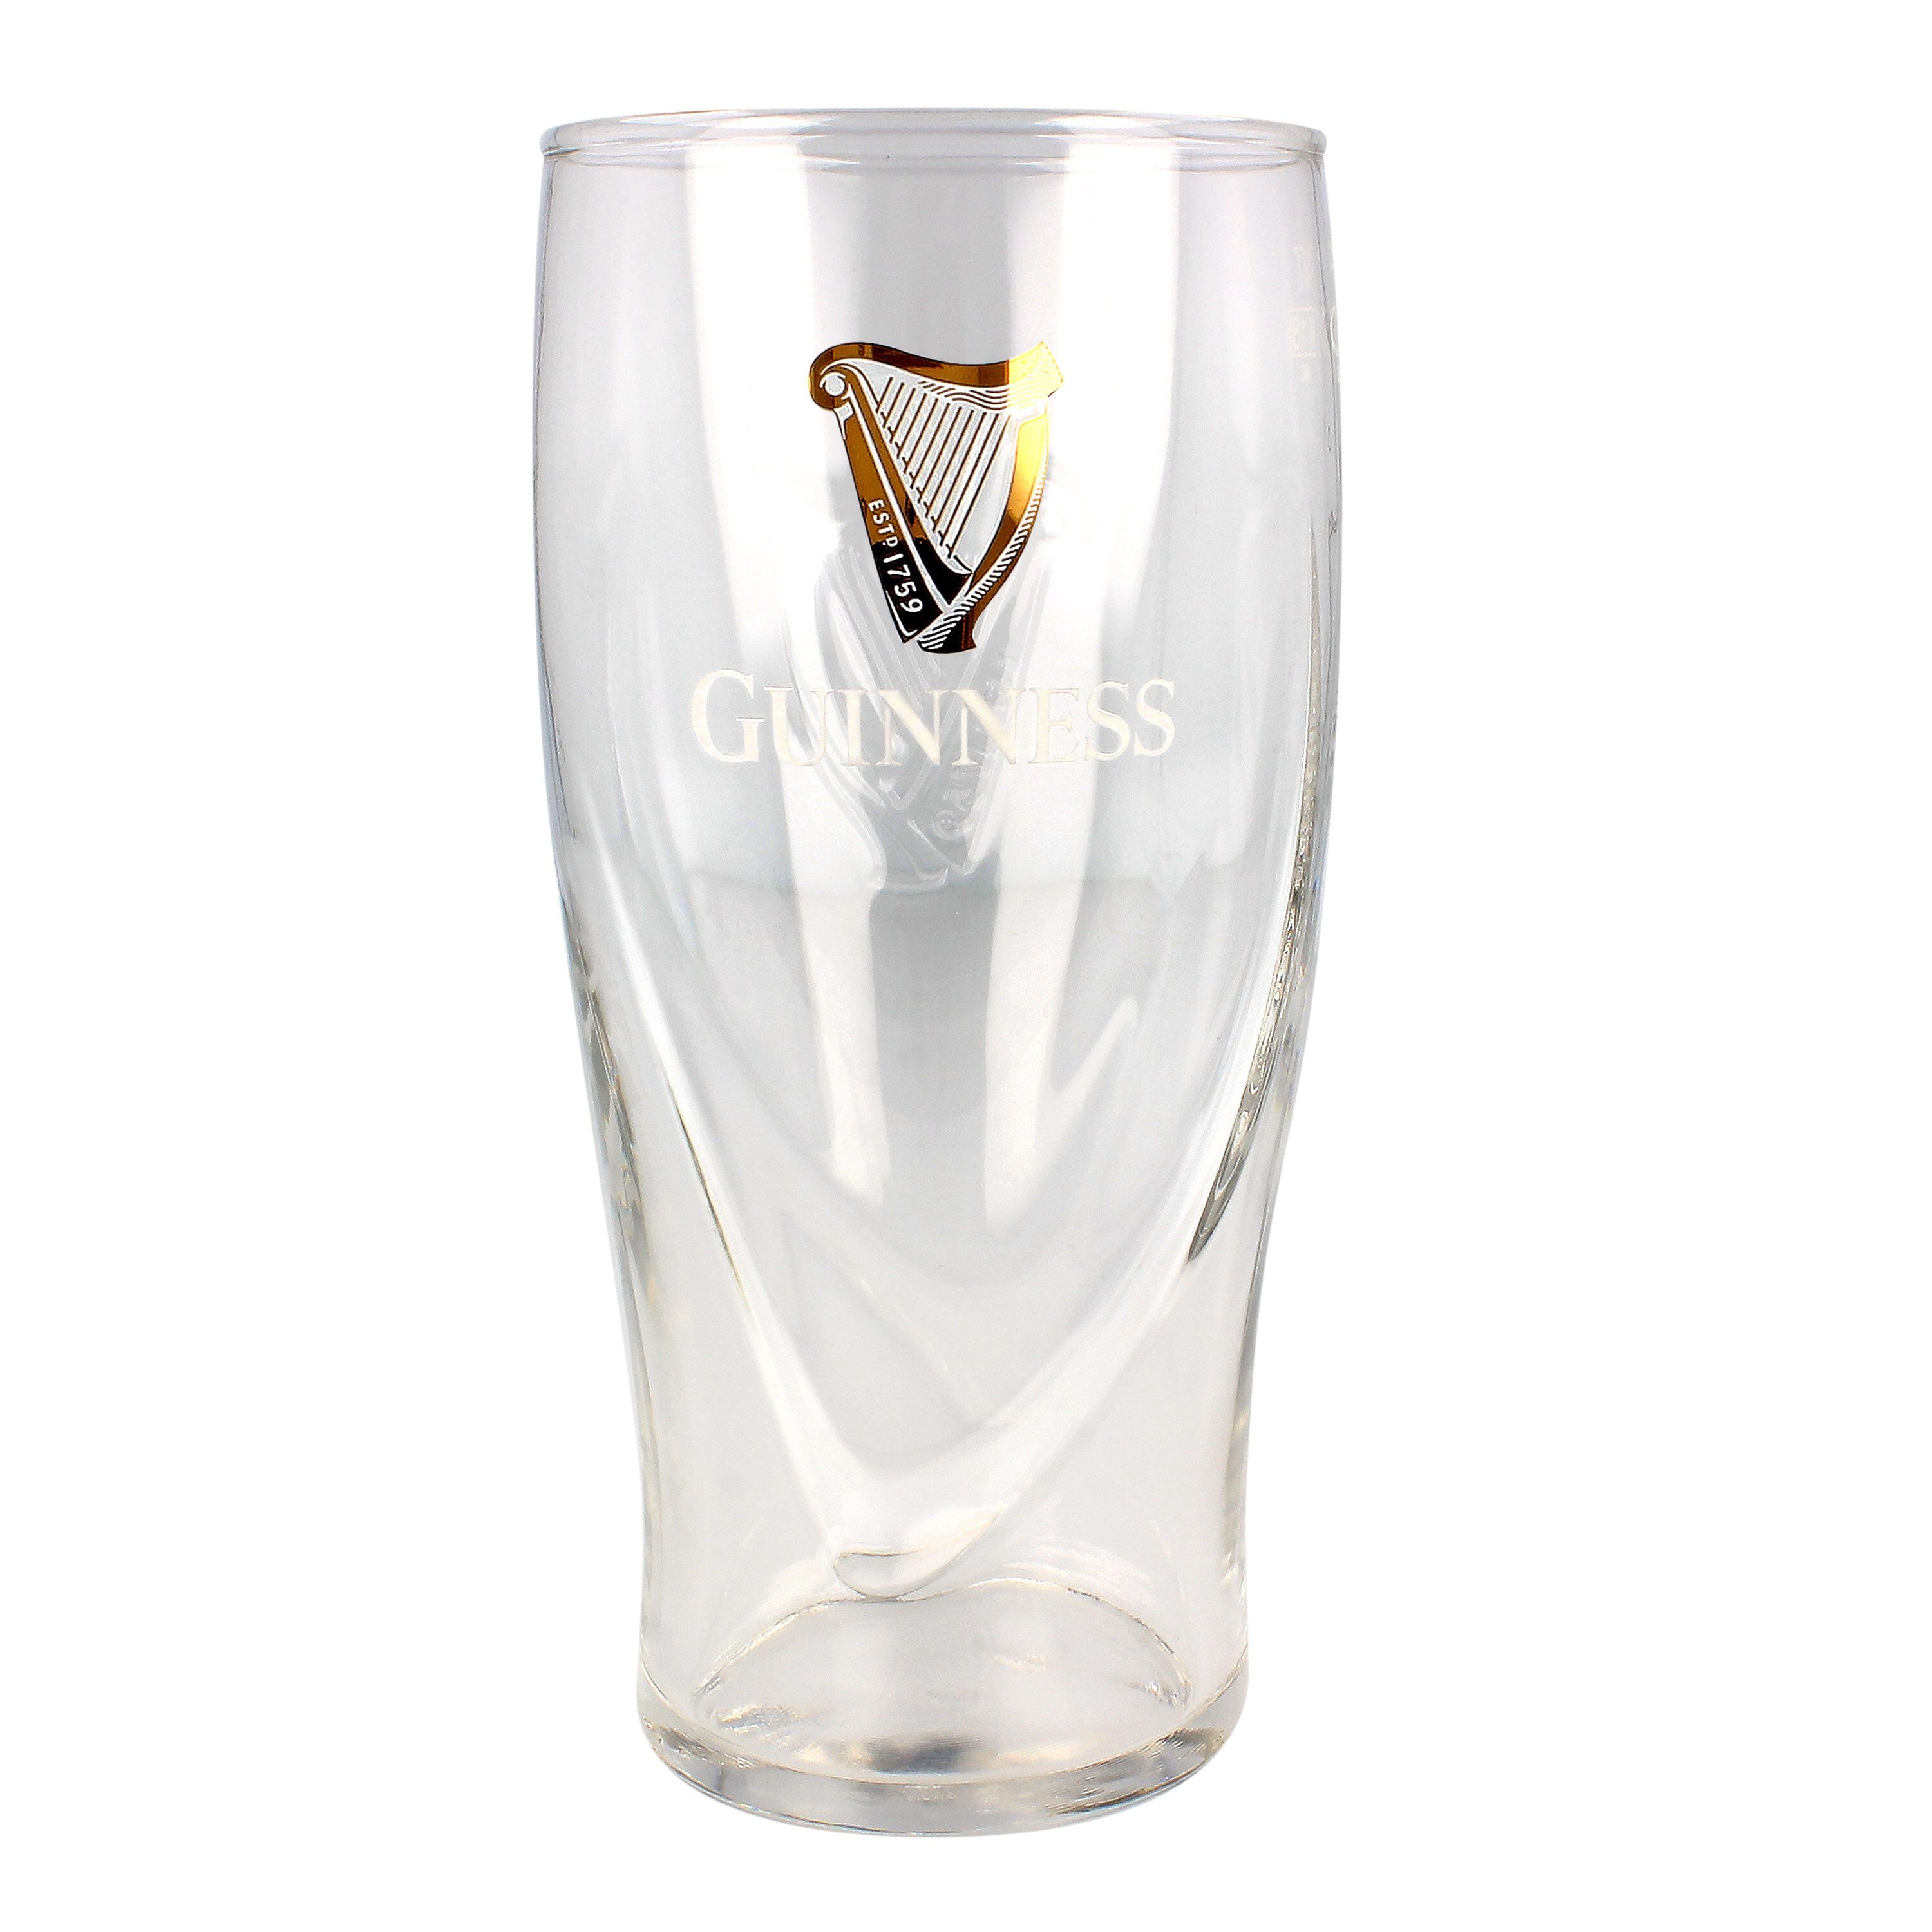 Guinness Half Pint Stem Glass